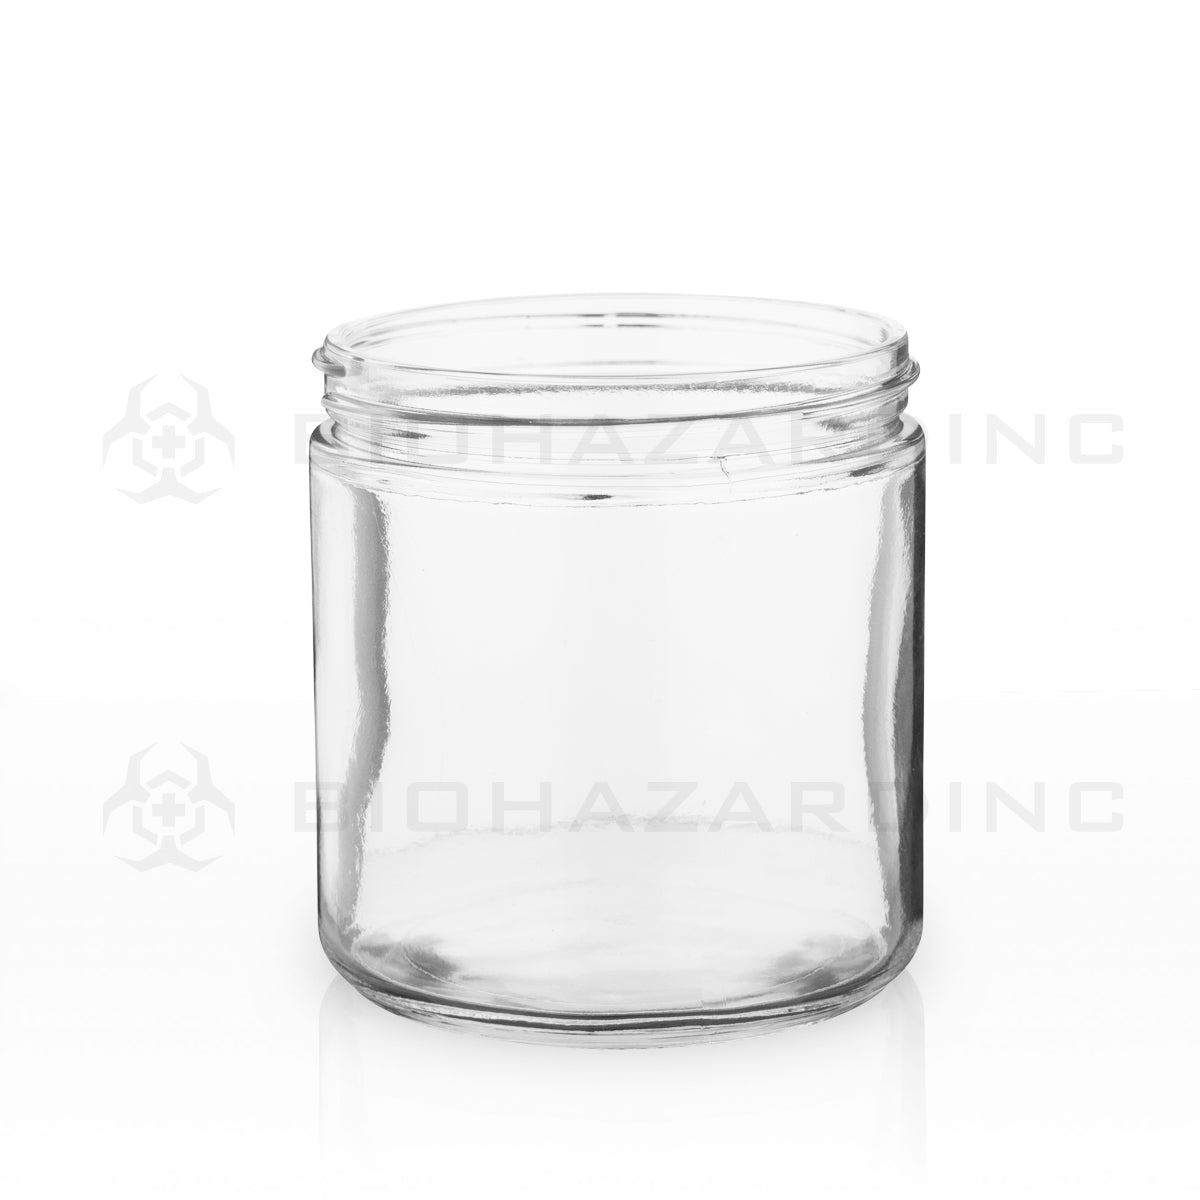 Glass Jar | Straight Sided Glass Jars - Clear | 89mm - 16oz - 12 Count Glass Jar Biohazard Inc   